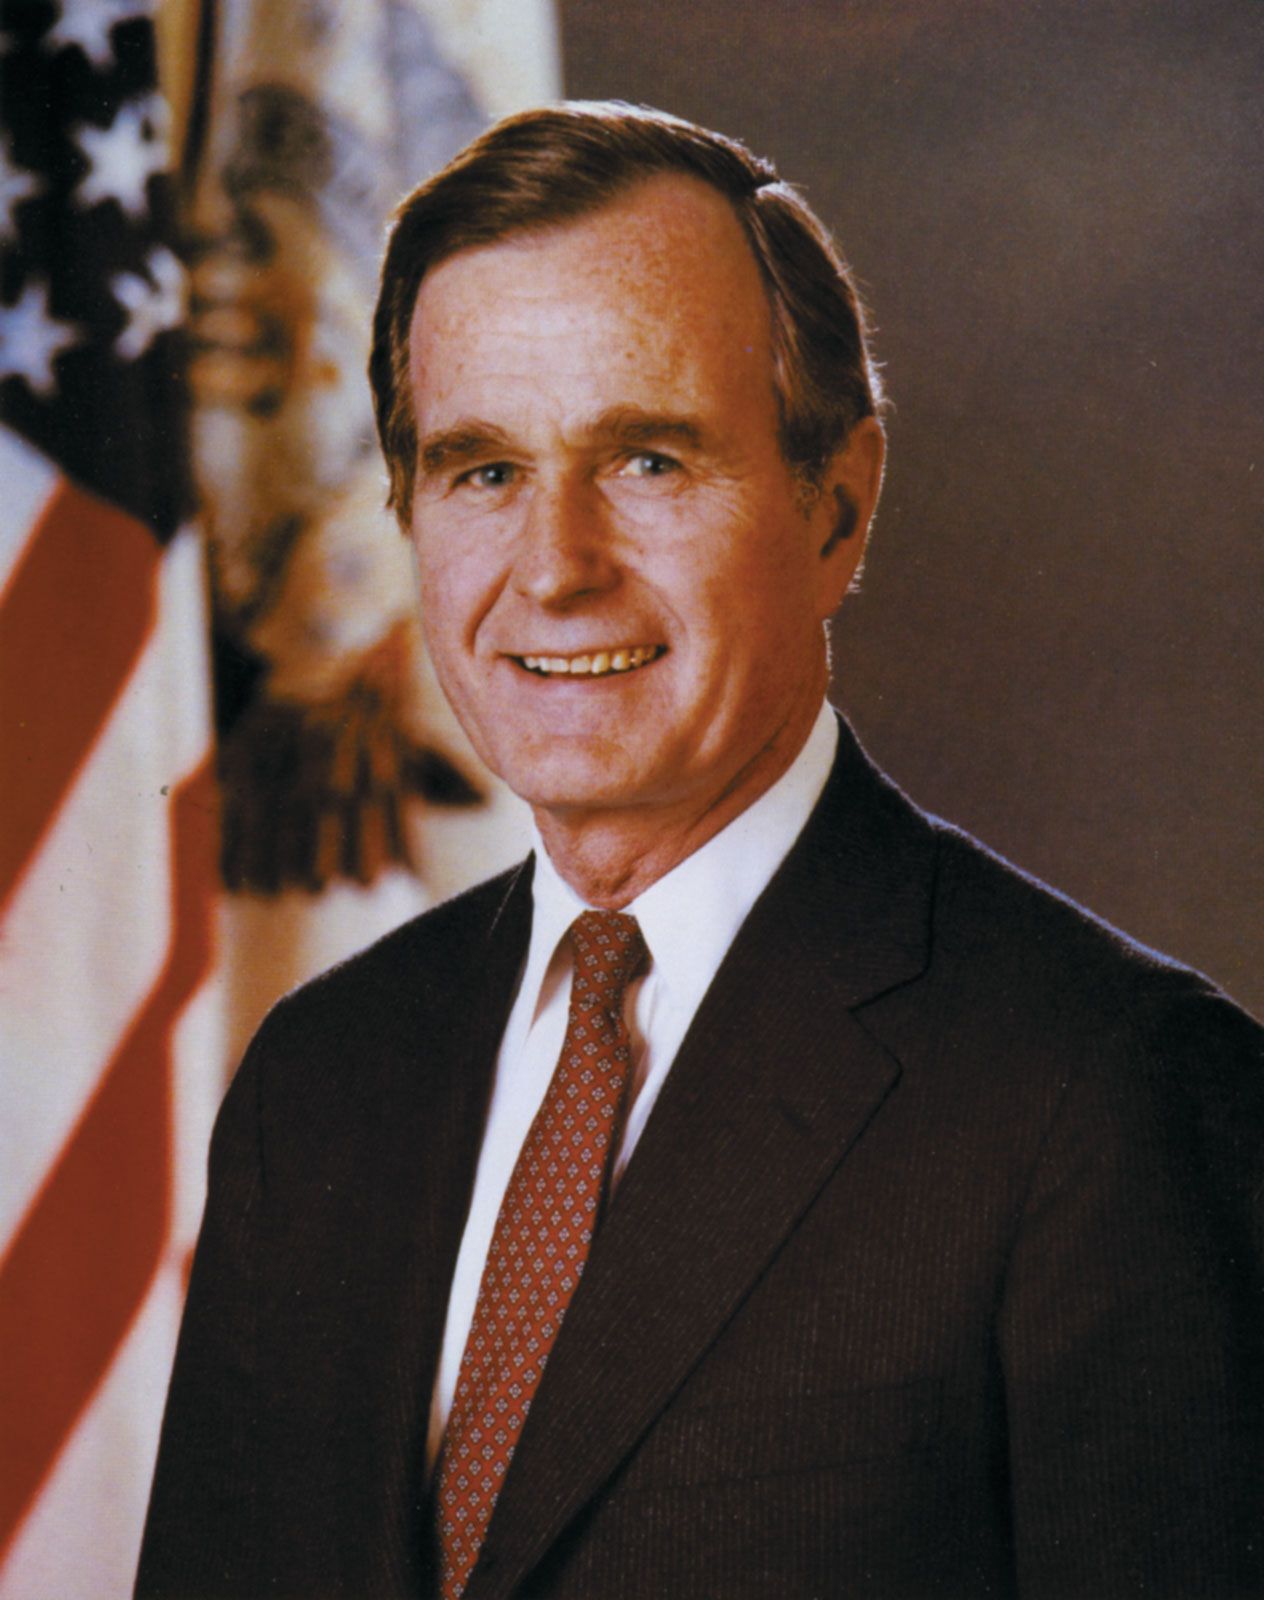 George-HW-Bush-1989.jpg